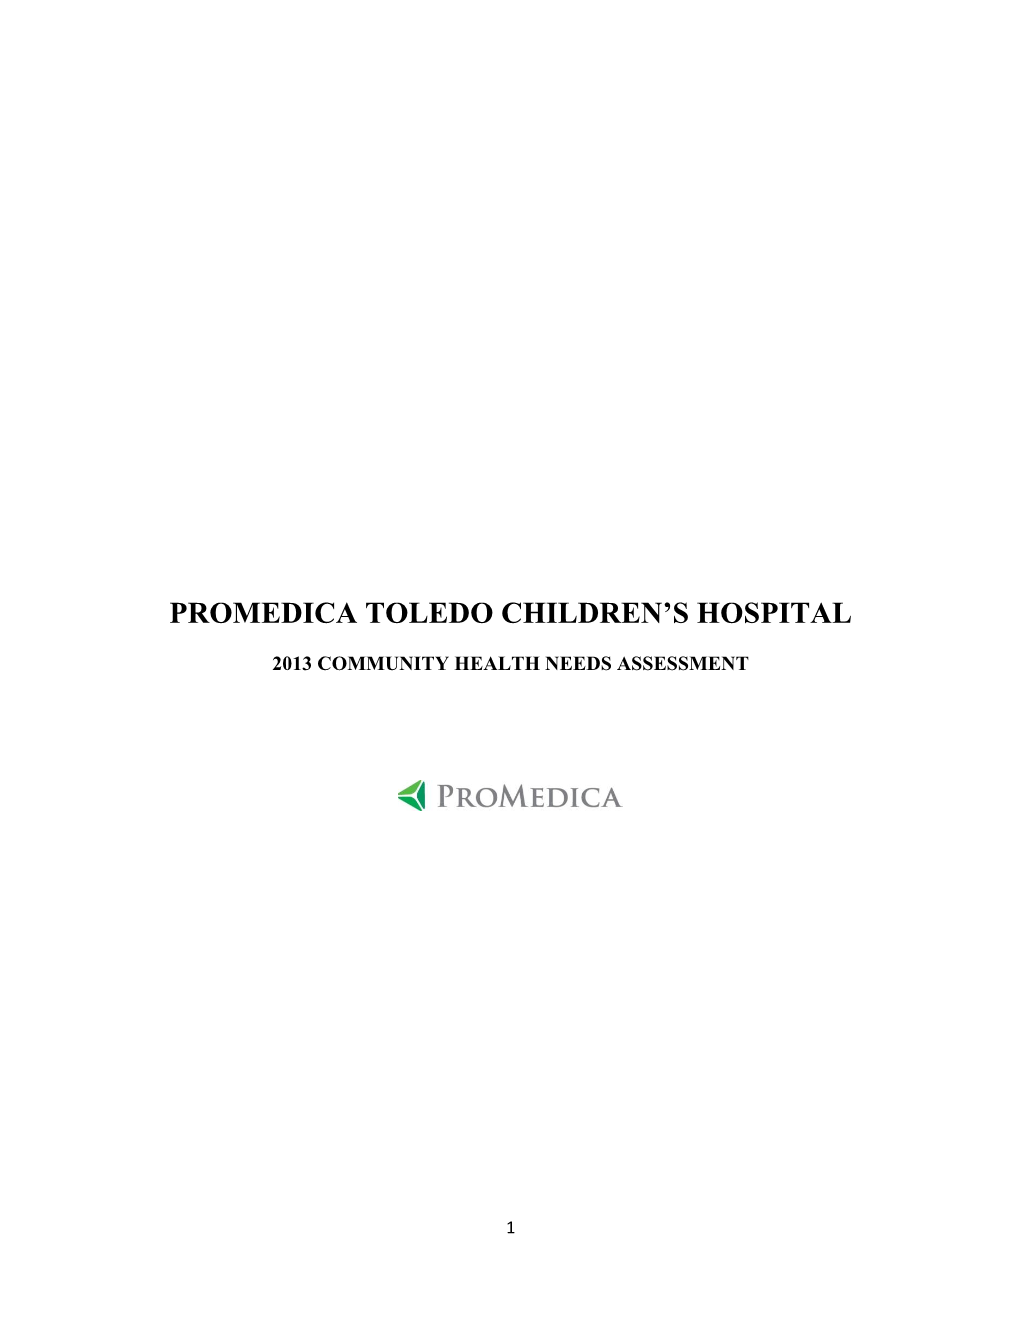 Promedica Toledo Children's Hospital